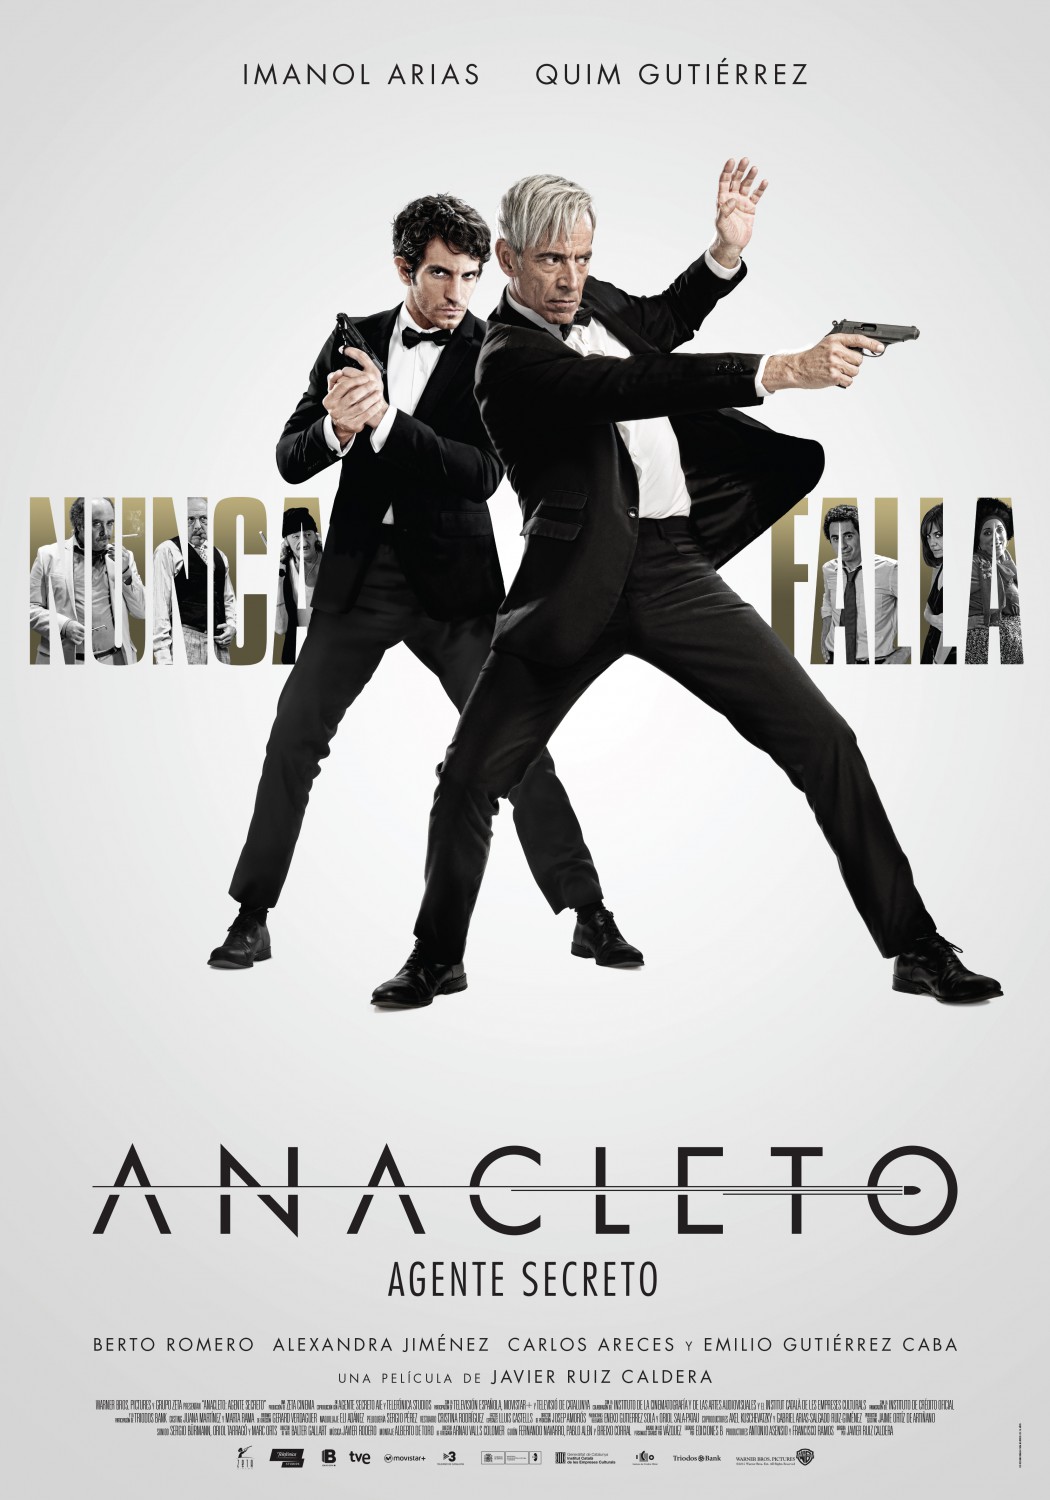 Extra Large Movie Poster Image for Anacleto: Agente secreto (#3 of 3)